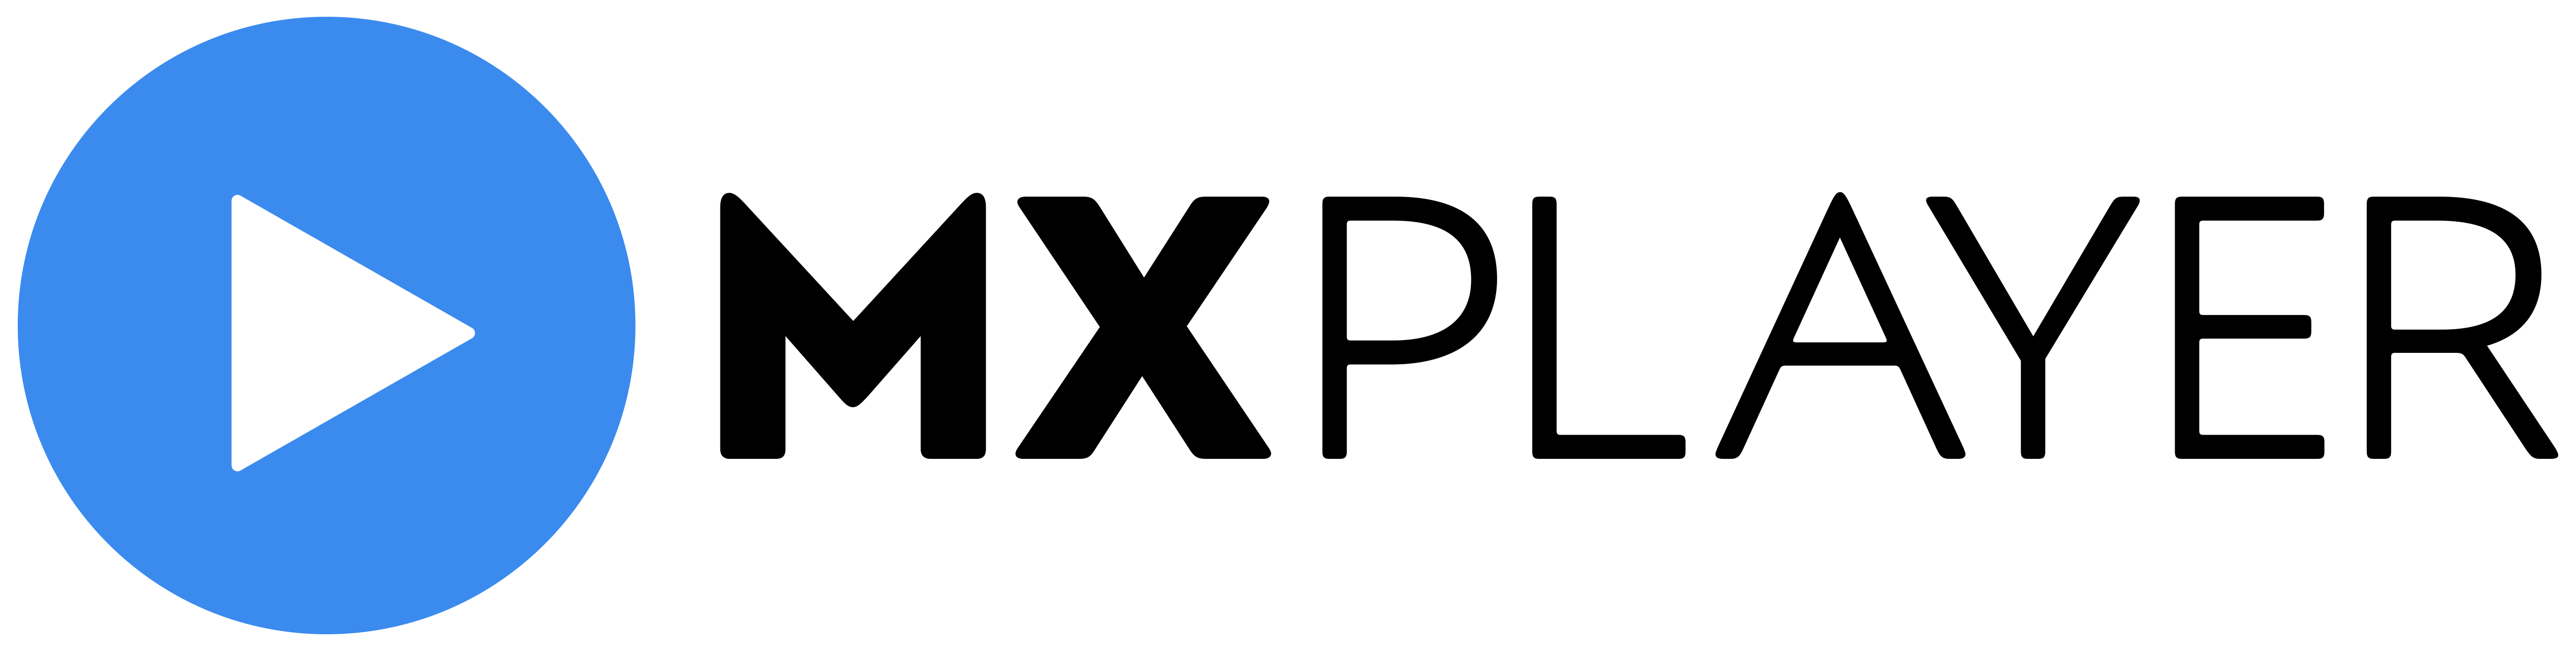 MX_Player_Logo